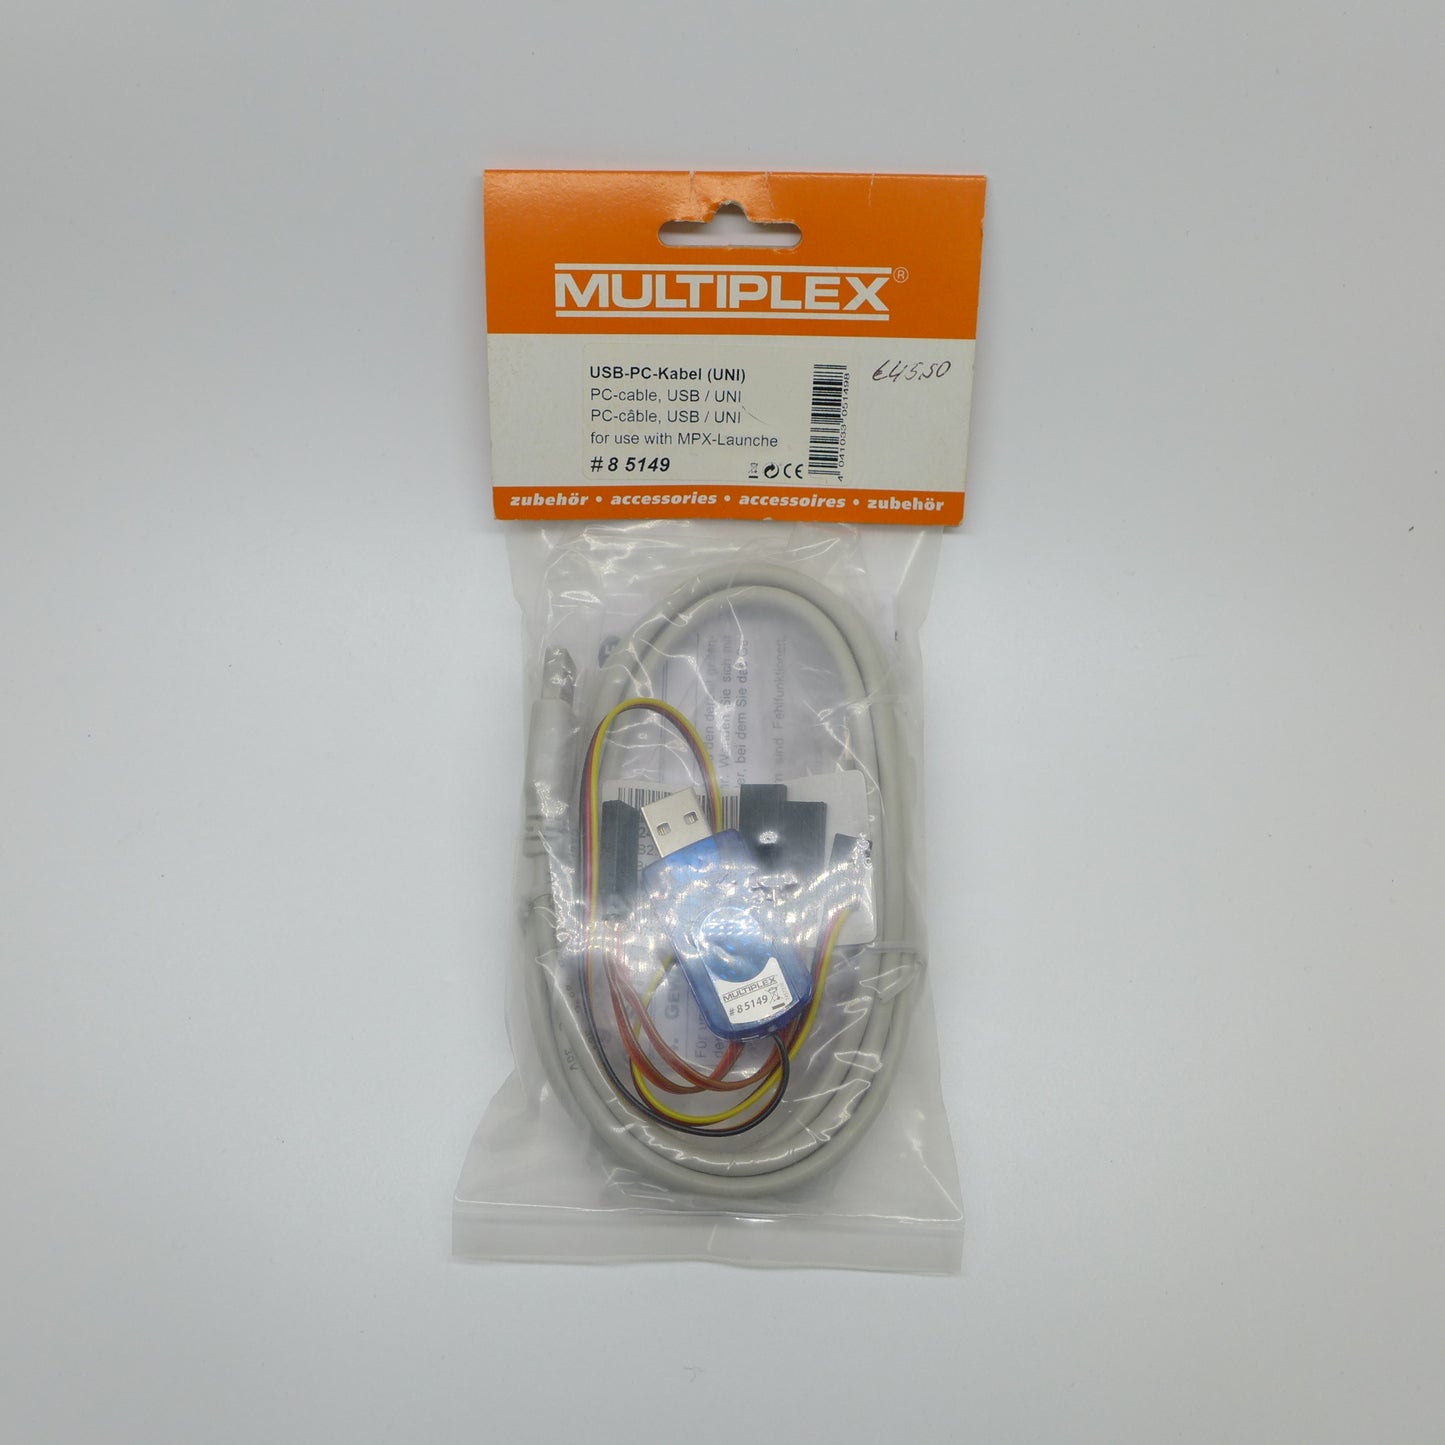 Multiplex USB-PC-Kabel (Uni)